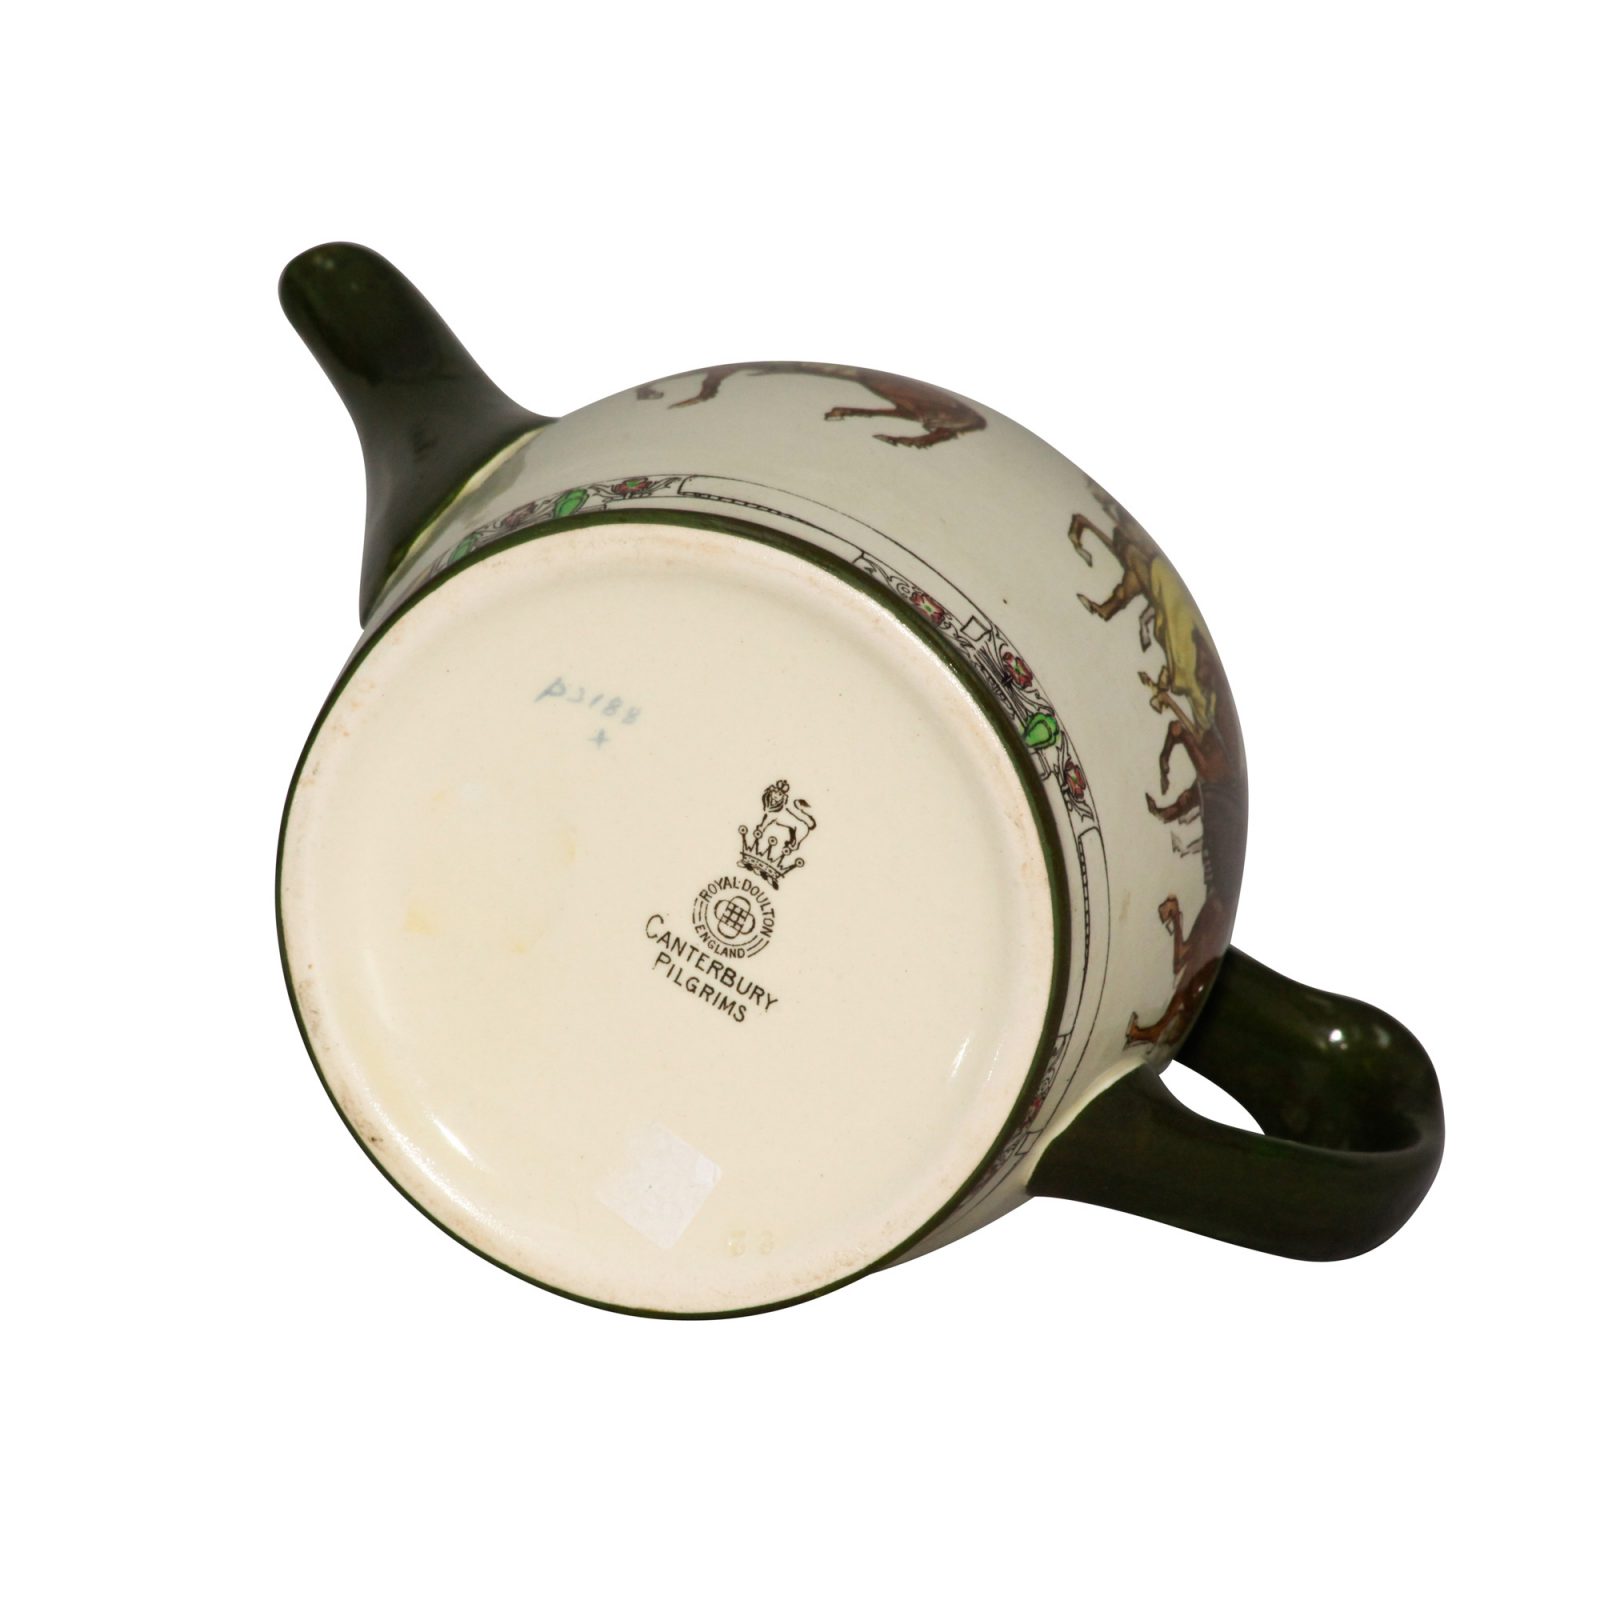 Teapot "Canterbury Pilgrims" - Royal Doulton Seriesware